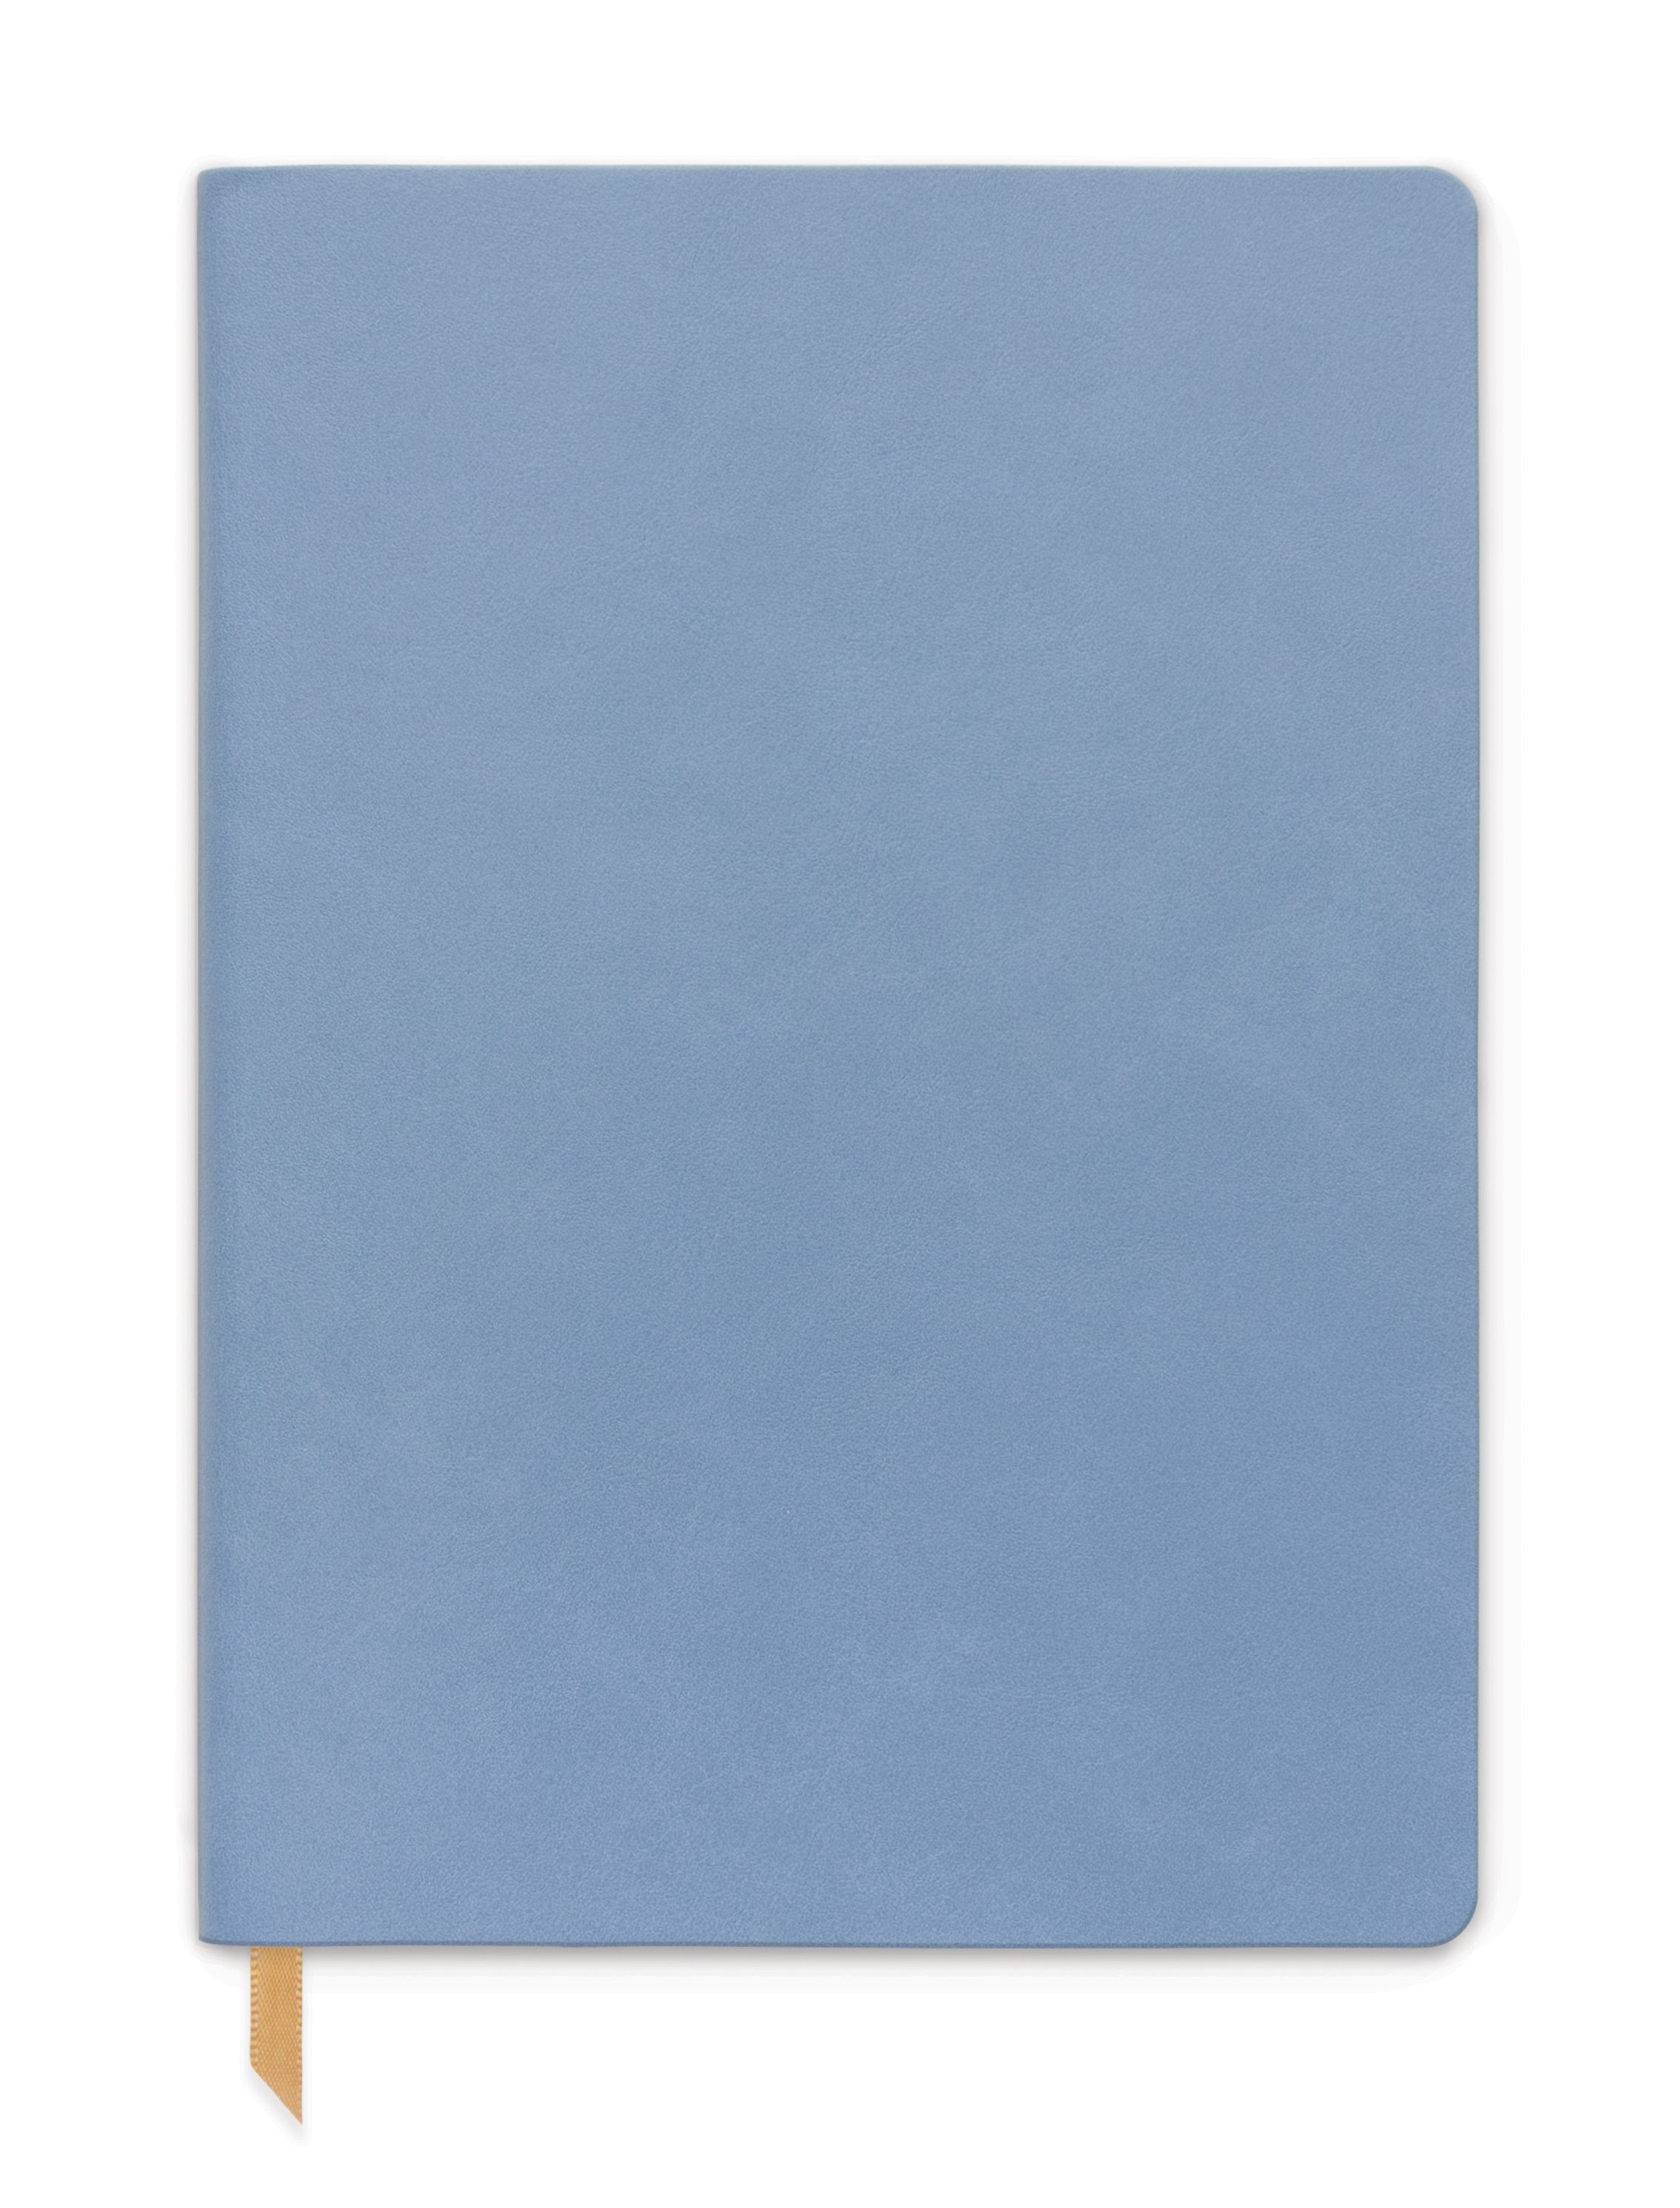 Carnet - Cornflower Blue - Vegan Leather Flex | DesignWorks Ink image0